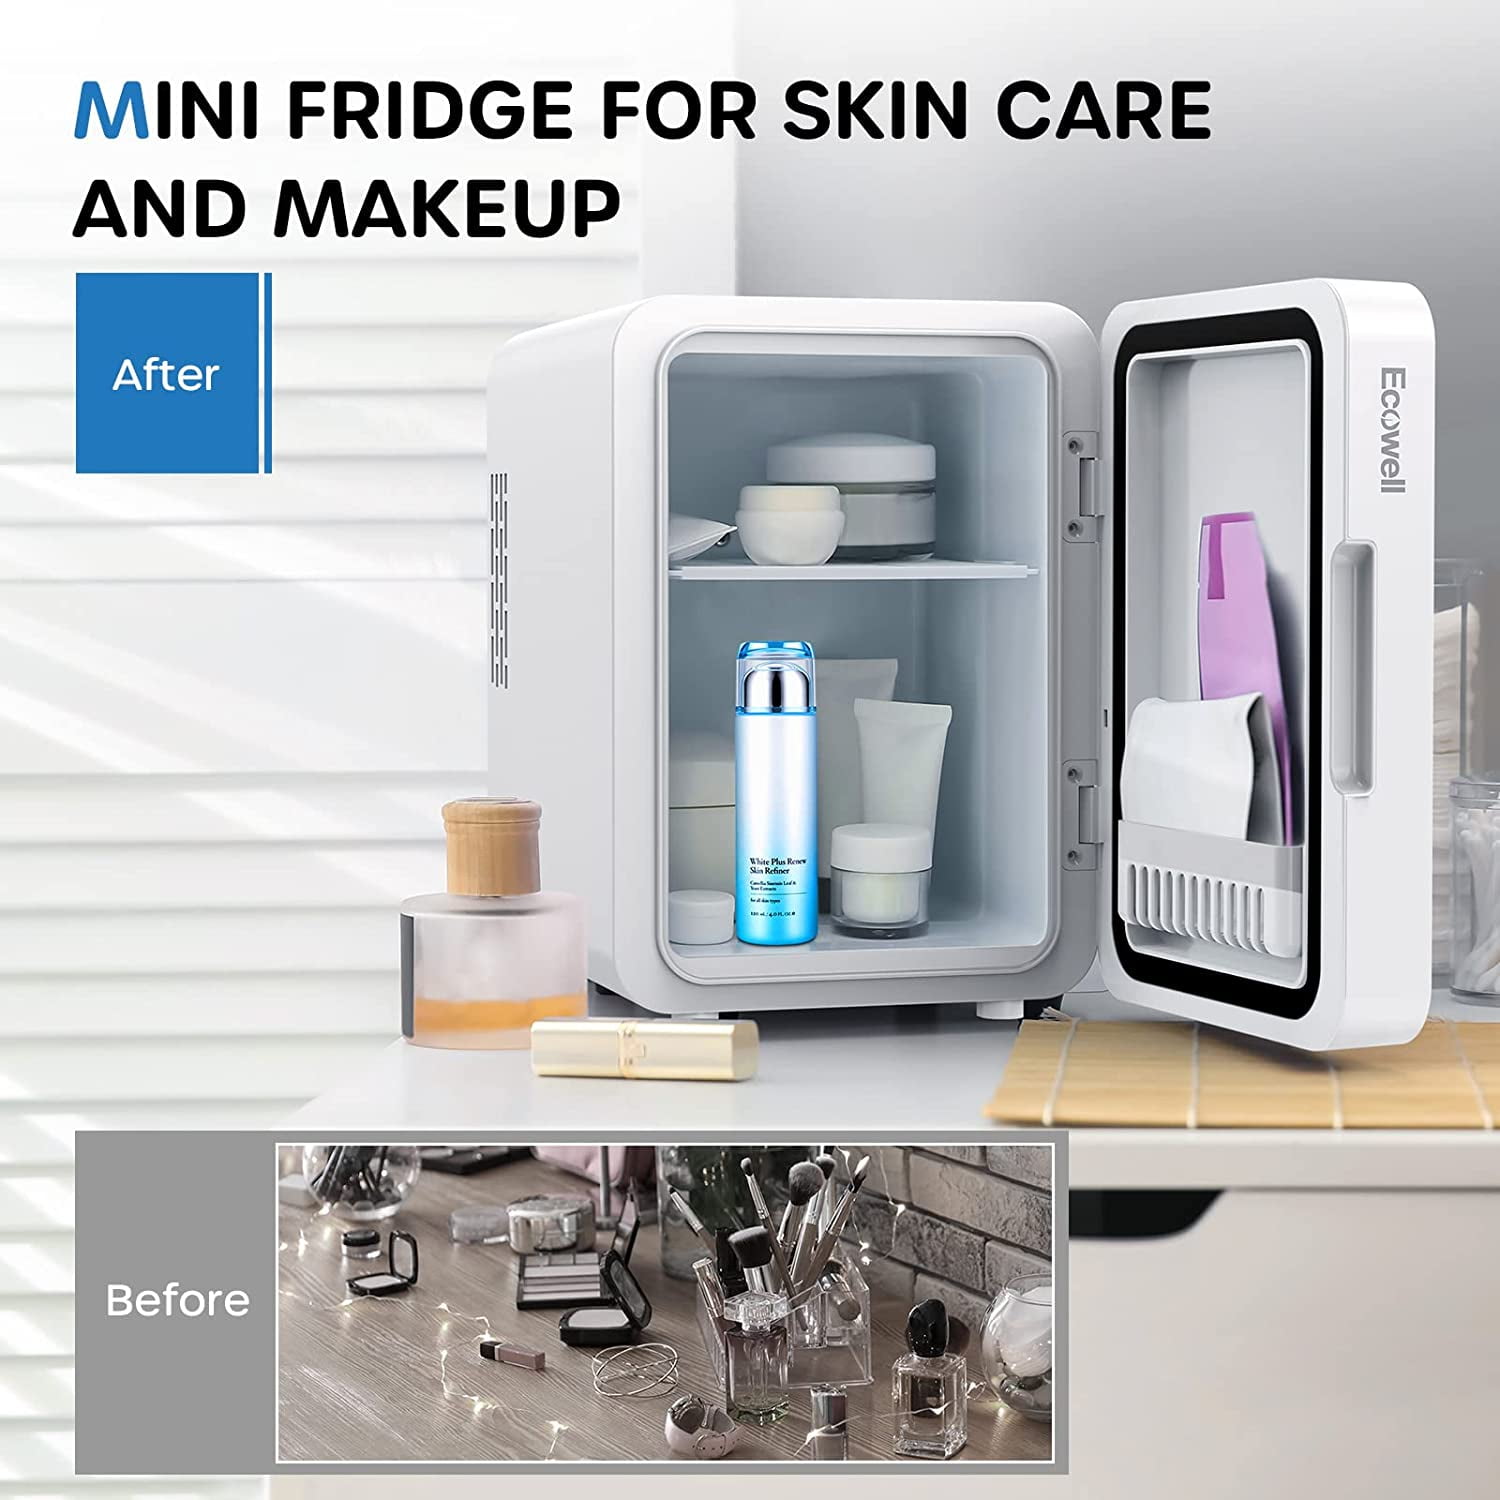  Living Enrichment Portable Mini Fridge 4 Liter 6 Can Skincare  Fridge, AC 120V DC 12V Small Refrigerator Cooler for Skincare, Foods,  Drinks, Bedroom, Travel and Car - Black : Home & Kitchen